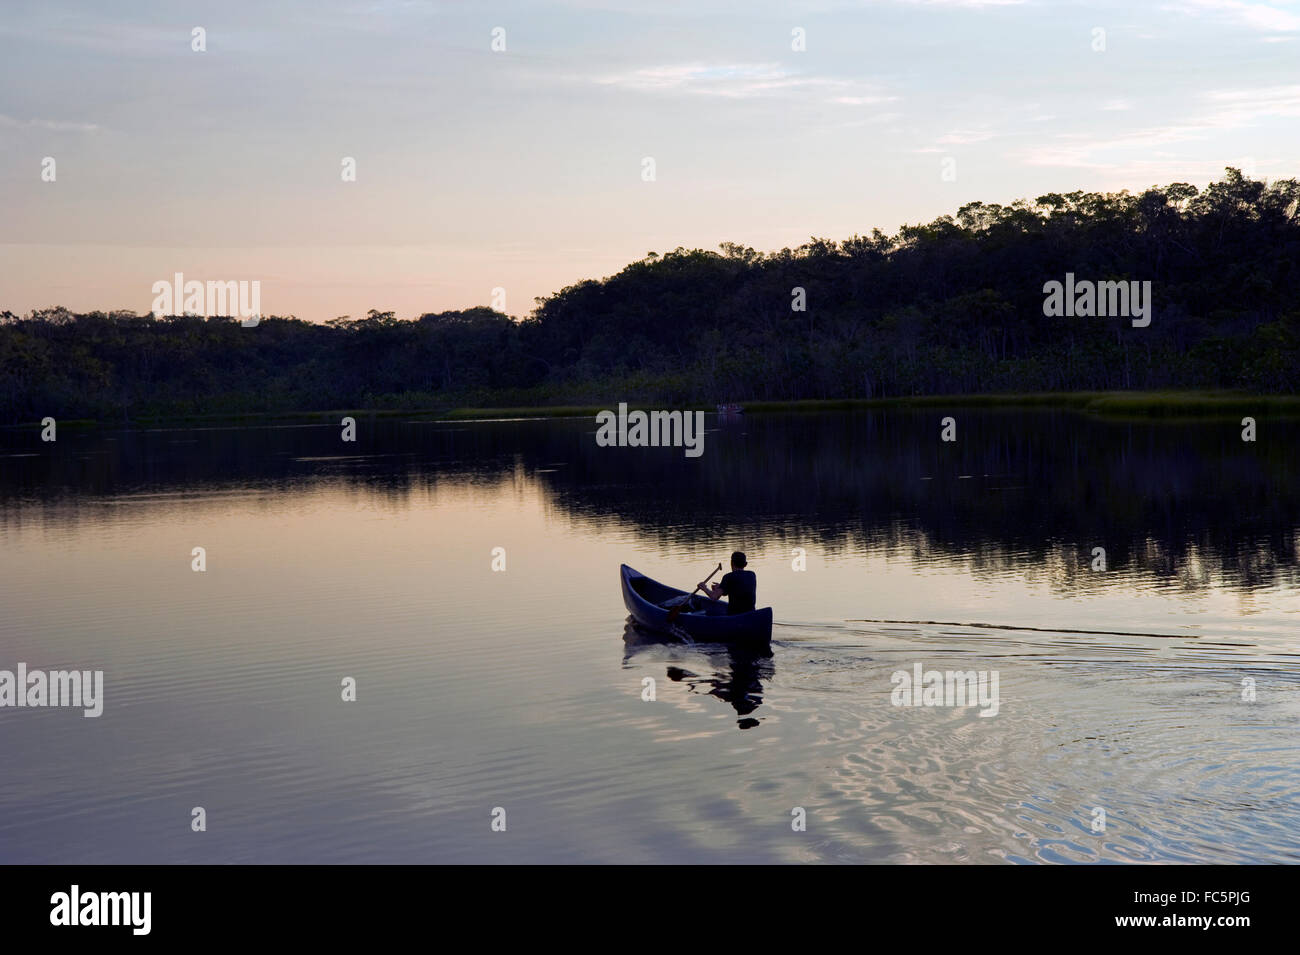 Person rowing a boat in the Amazon River in Ecuador Stock Photo